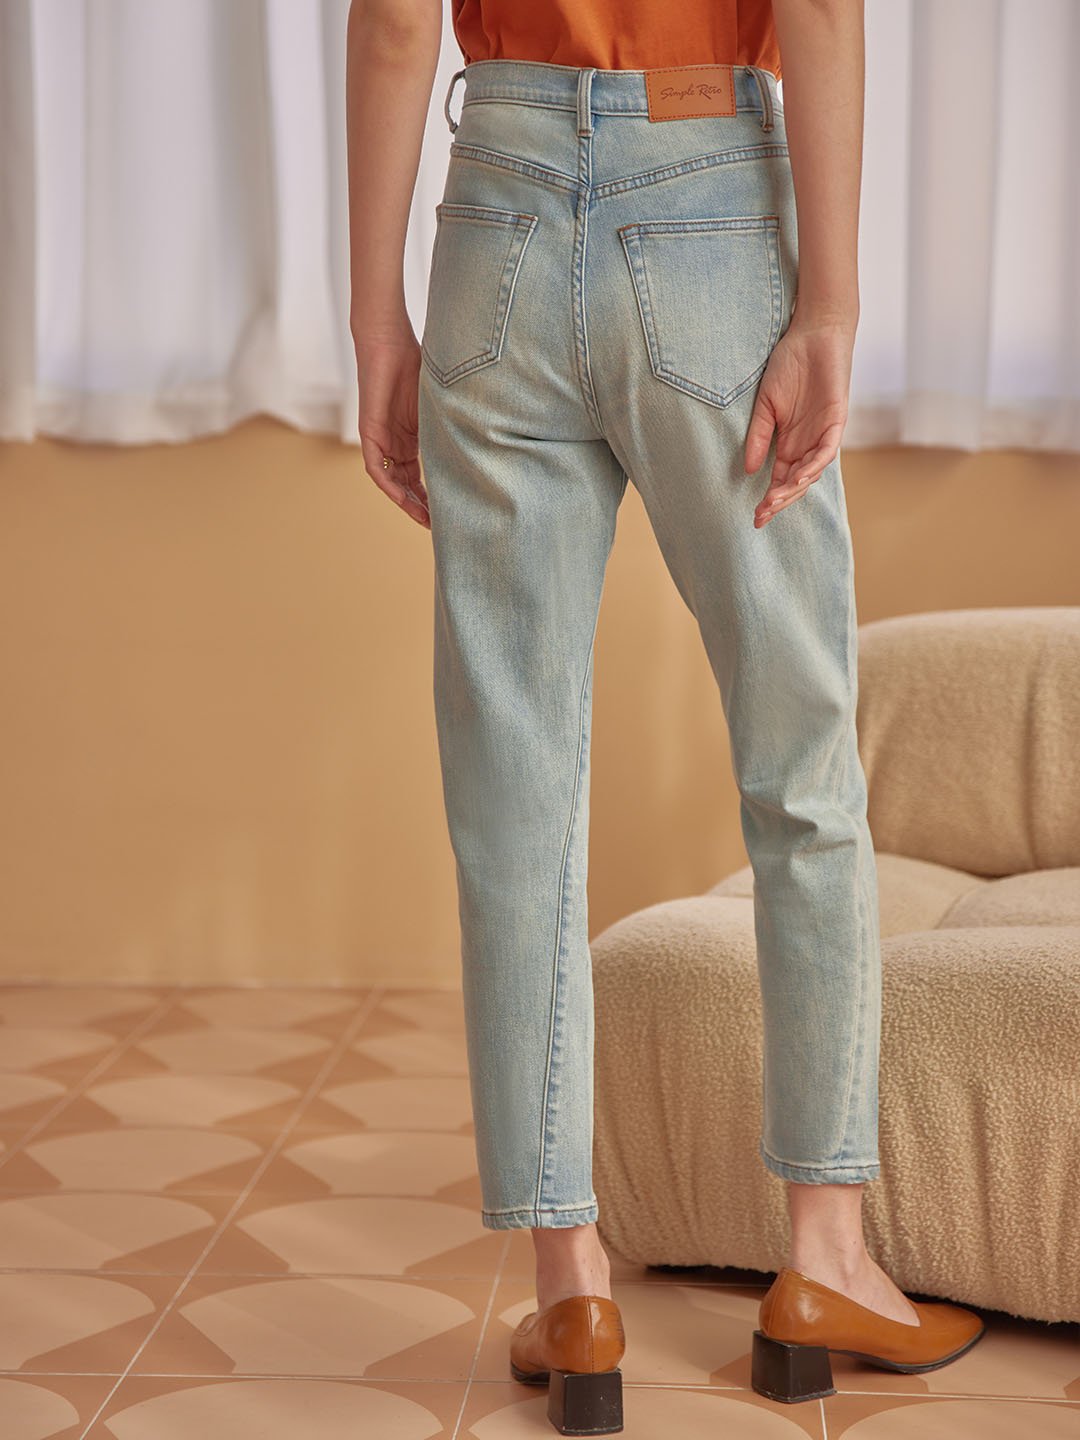 Simple Retro-Gemma 淺藍色高腰修身顯瘦牛仔褲